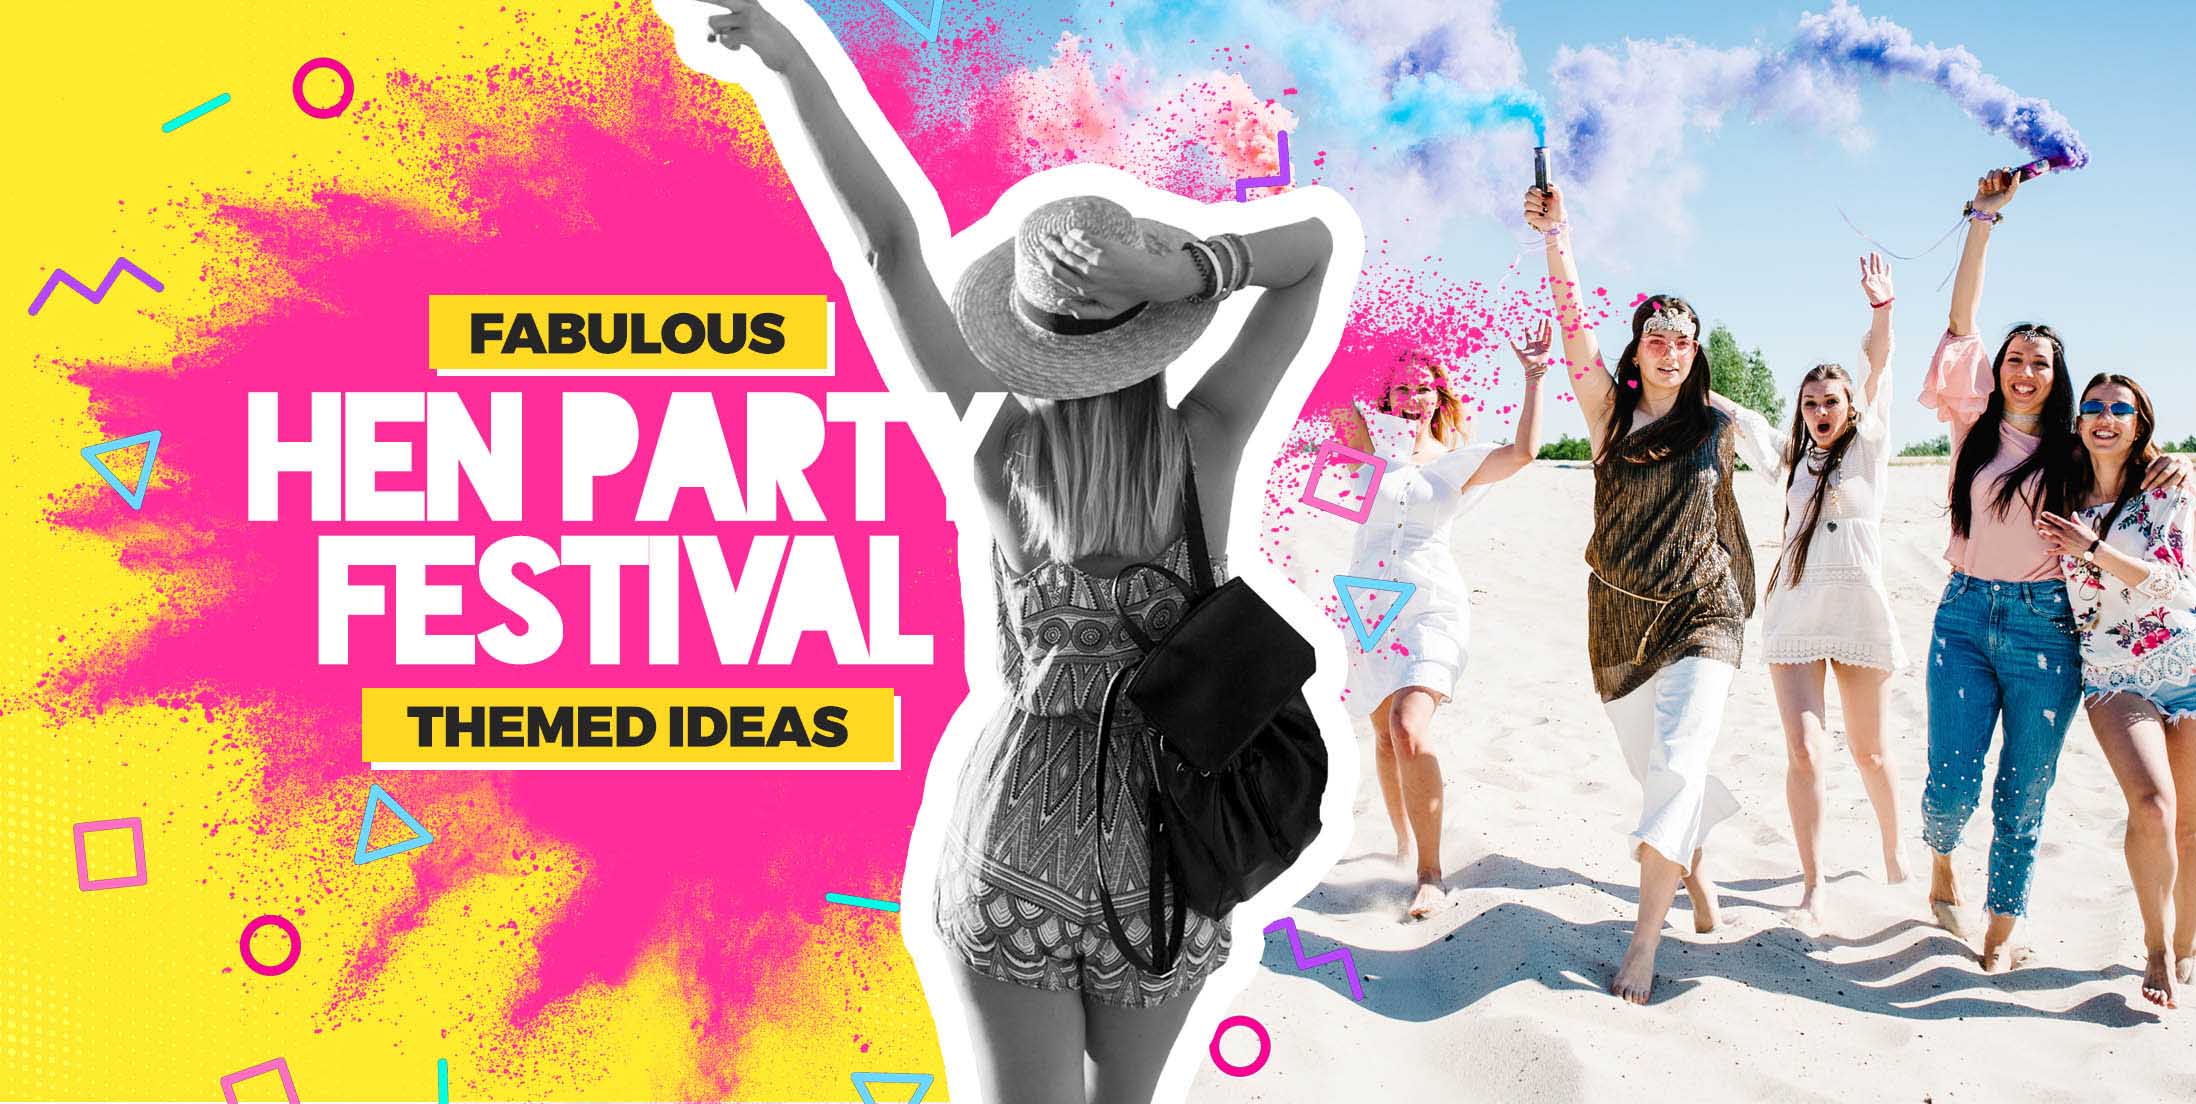 Fabulous Festival Hen Party Ideas